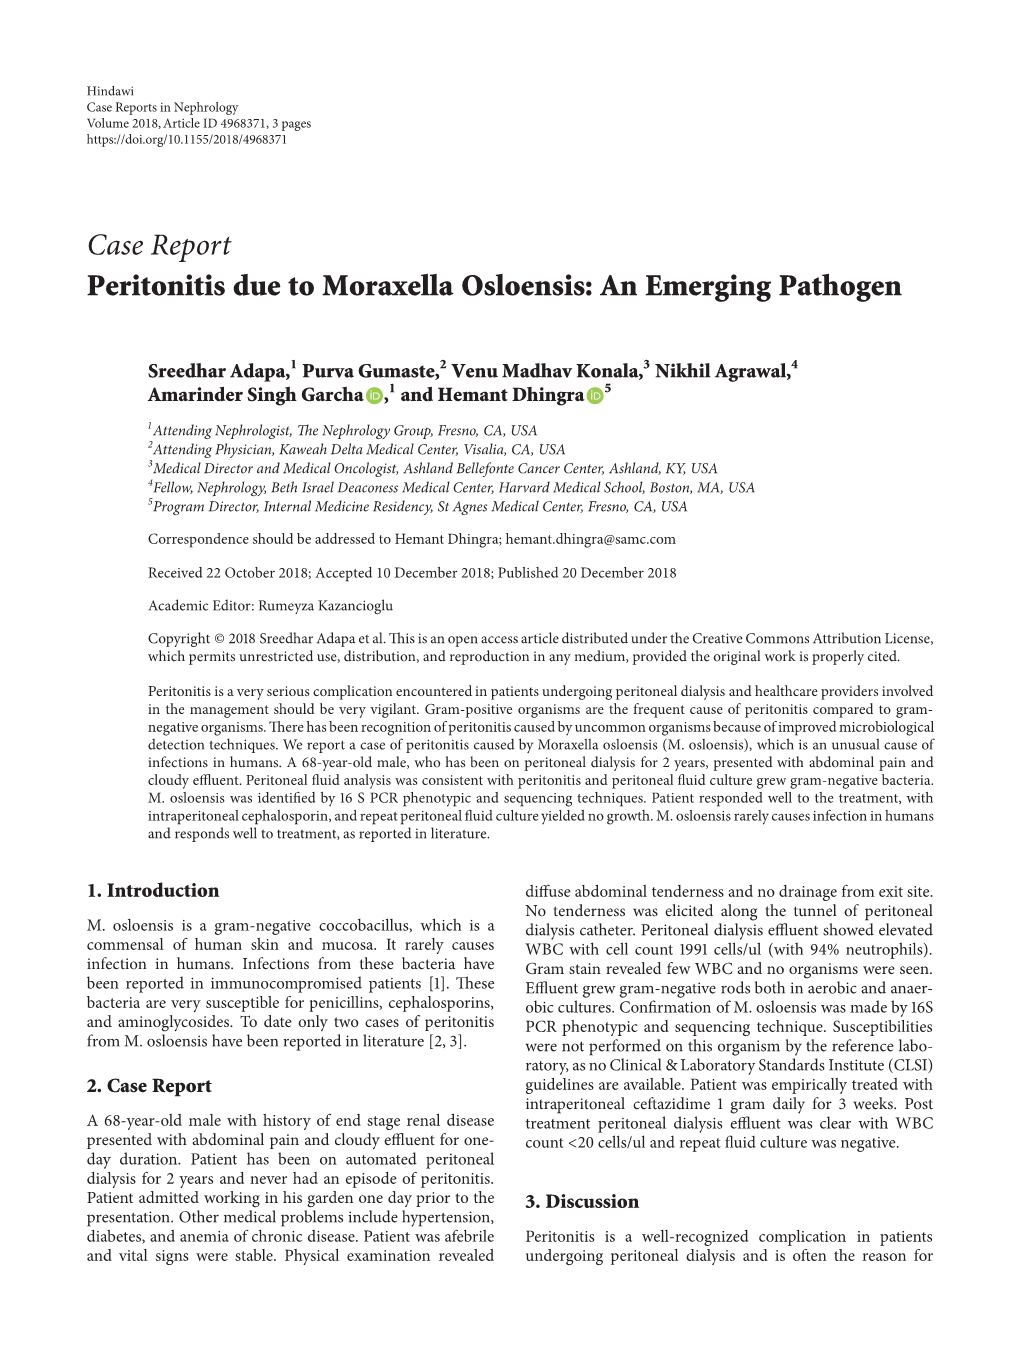 Case Report Peritonitis Due to Moraxella Osloensis: an Emerging Pathogen